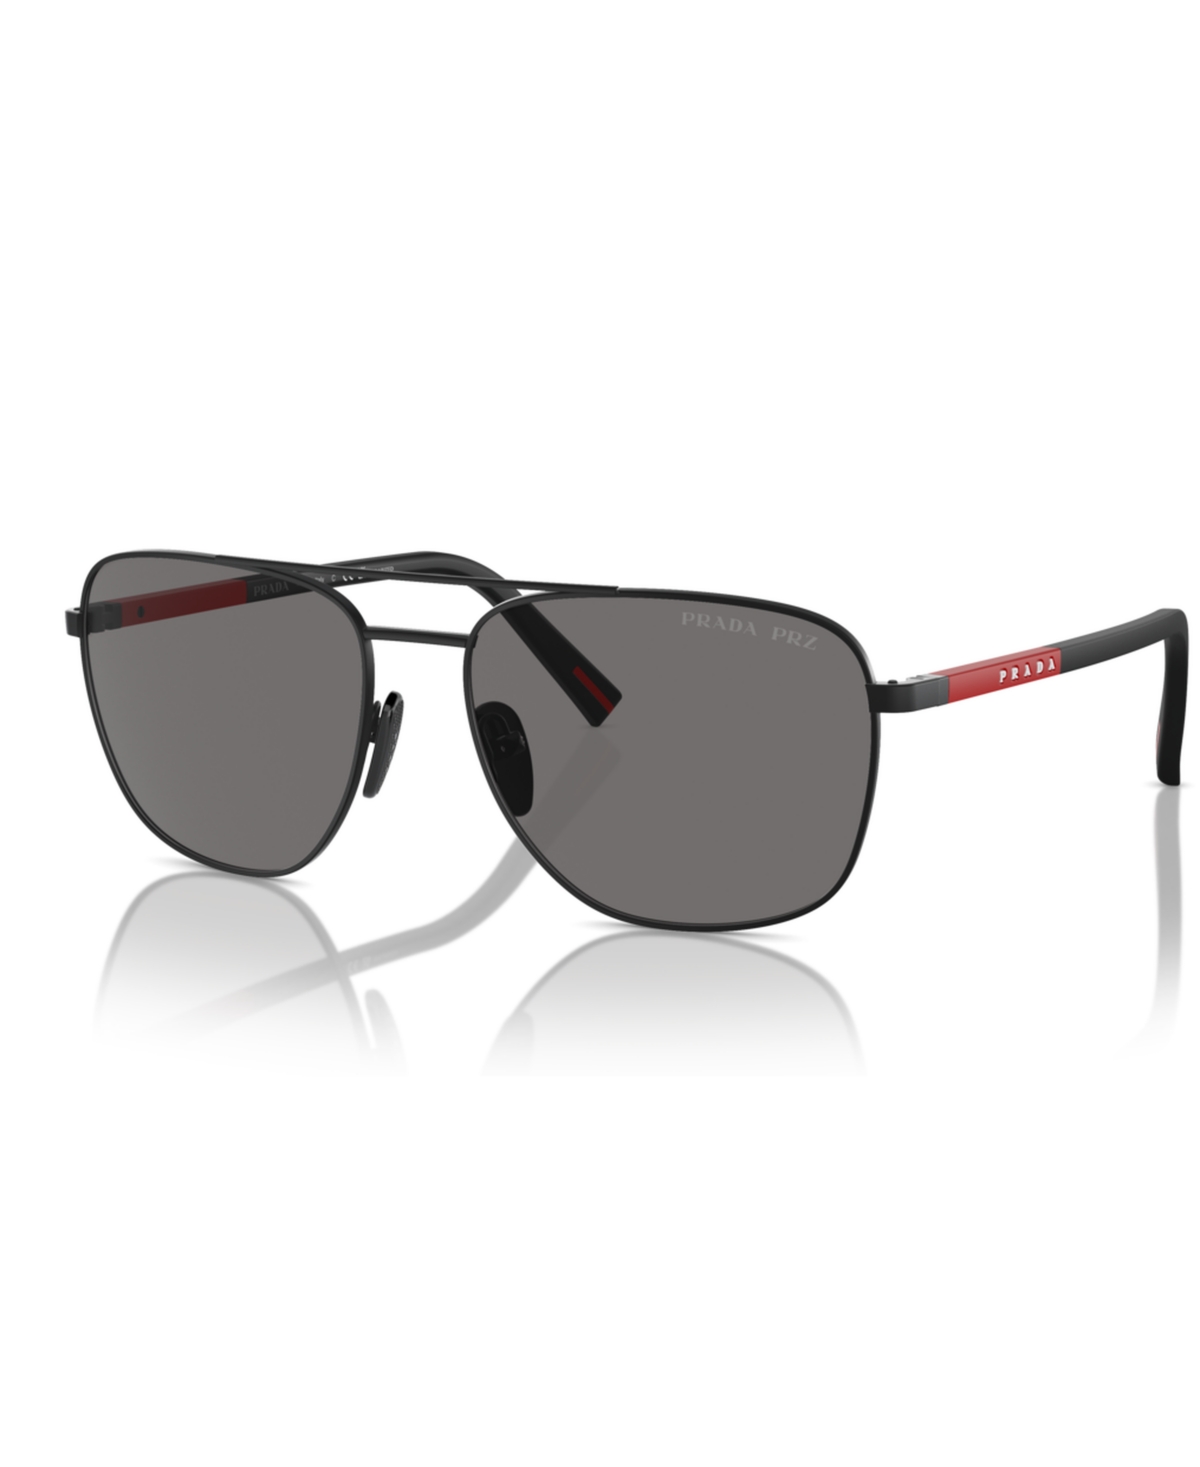 Men's Polarized Sunglasses, Ps 54ZS - Matte Blac